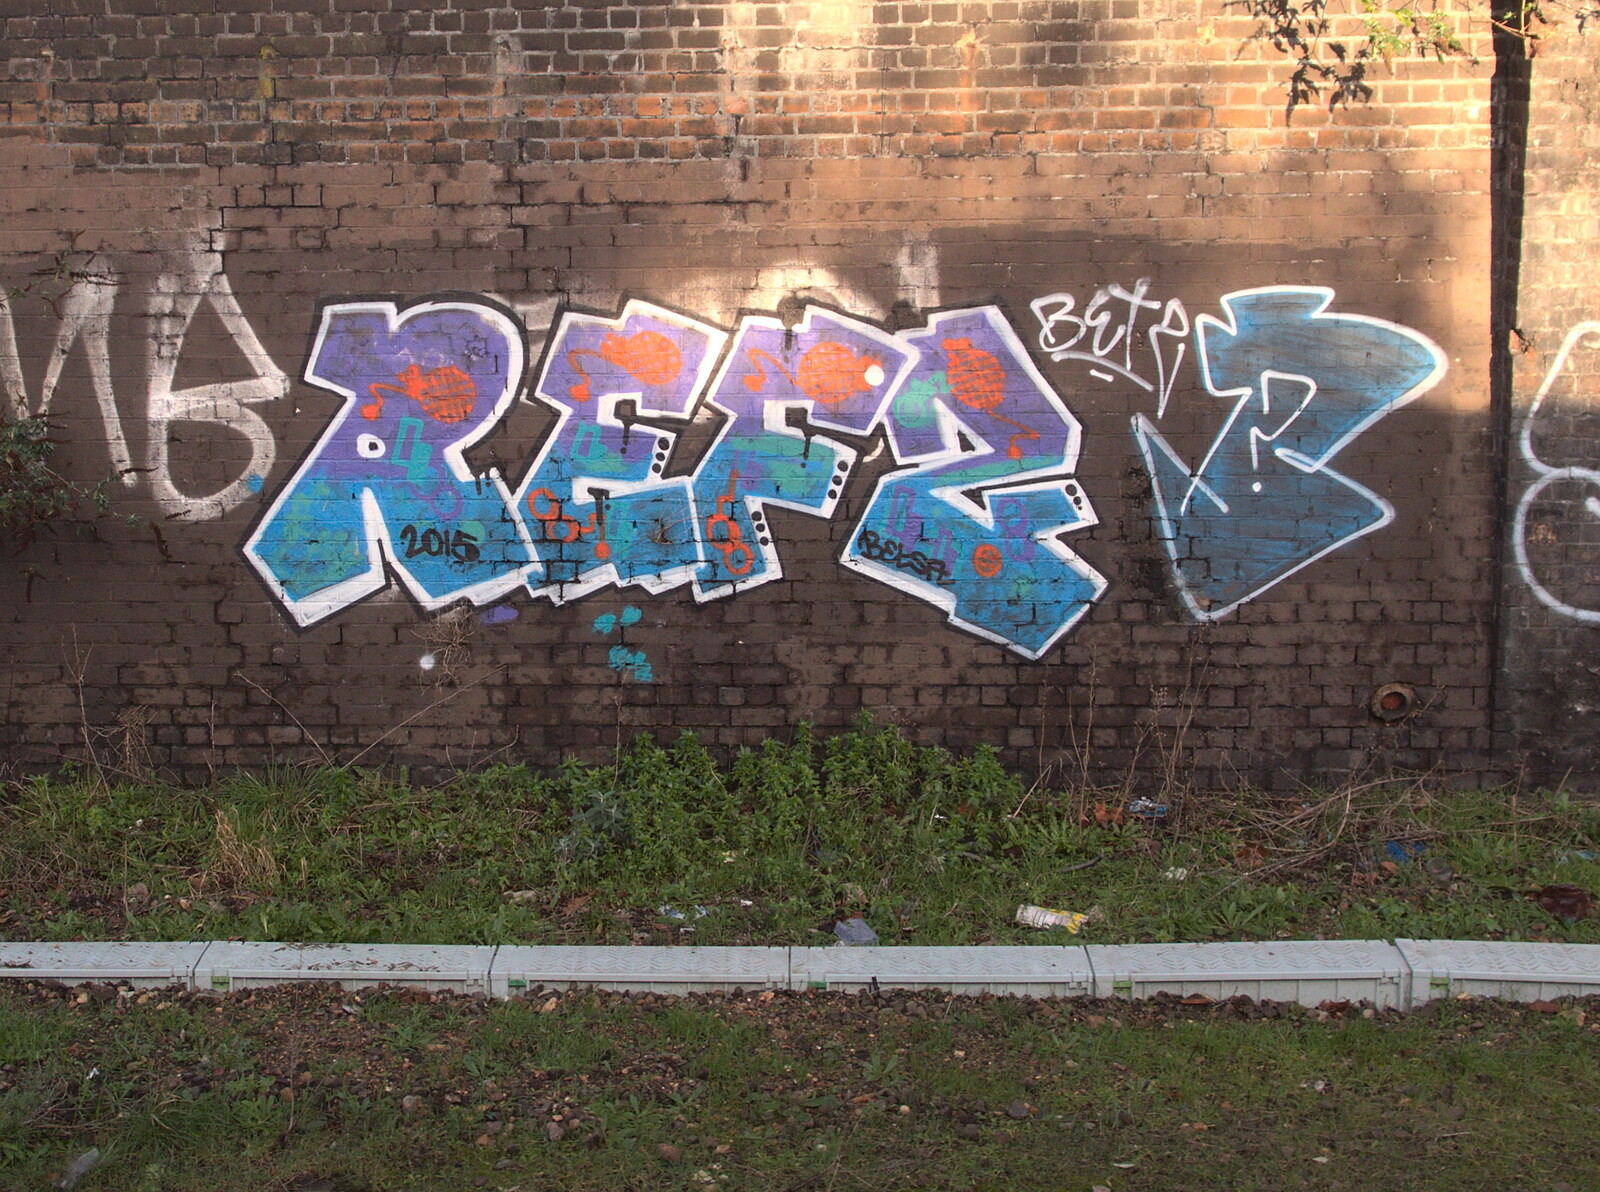 Refz graffiti from Ten-Pin Bowling, Riverside, Norwich - 3rd January 2016